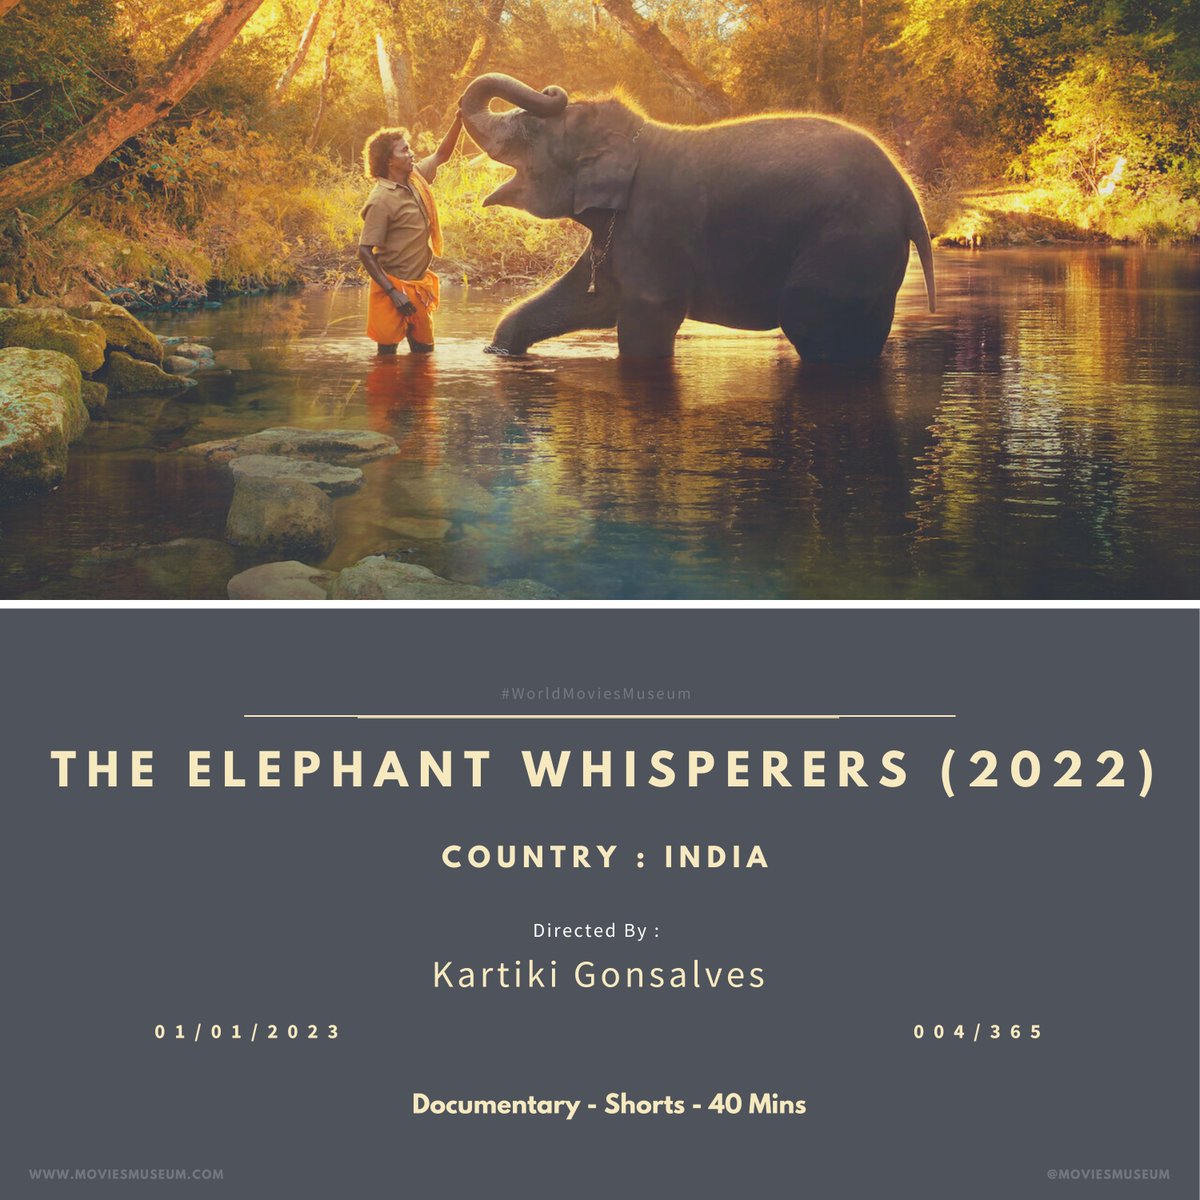 The Elephant Whisperers 2022 Directed by Kartiki Gonsalves
- Netflix 
#4

95th Oscar Awards Short Documentary - Shortlisted  

#MoviesMuseum #OscarShorts #Documentary  #Shortlisted #India #TheElephantWhisperers